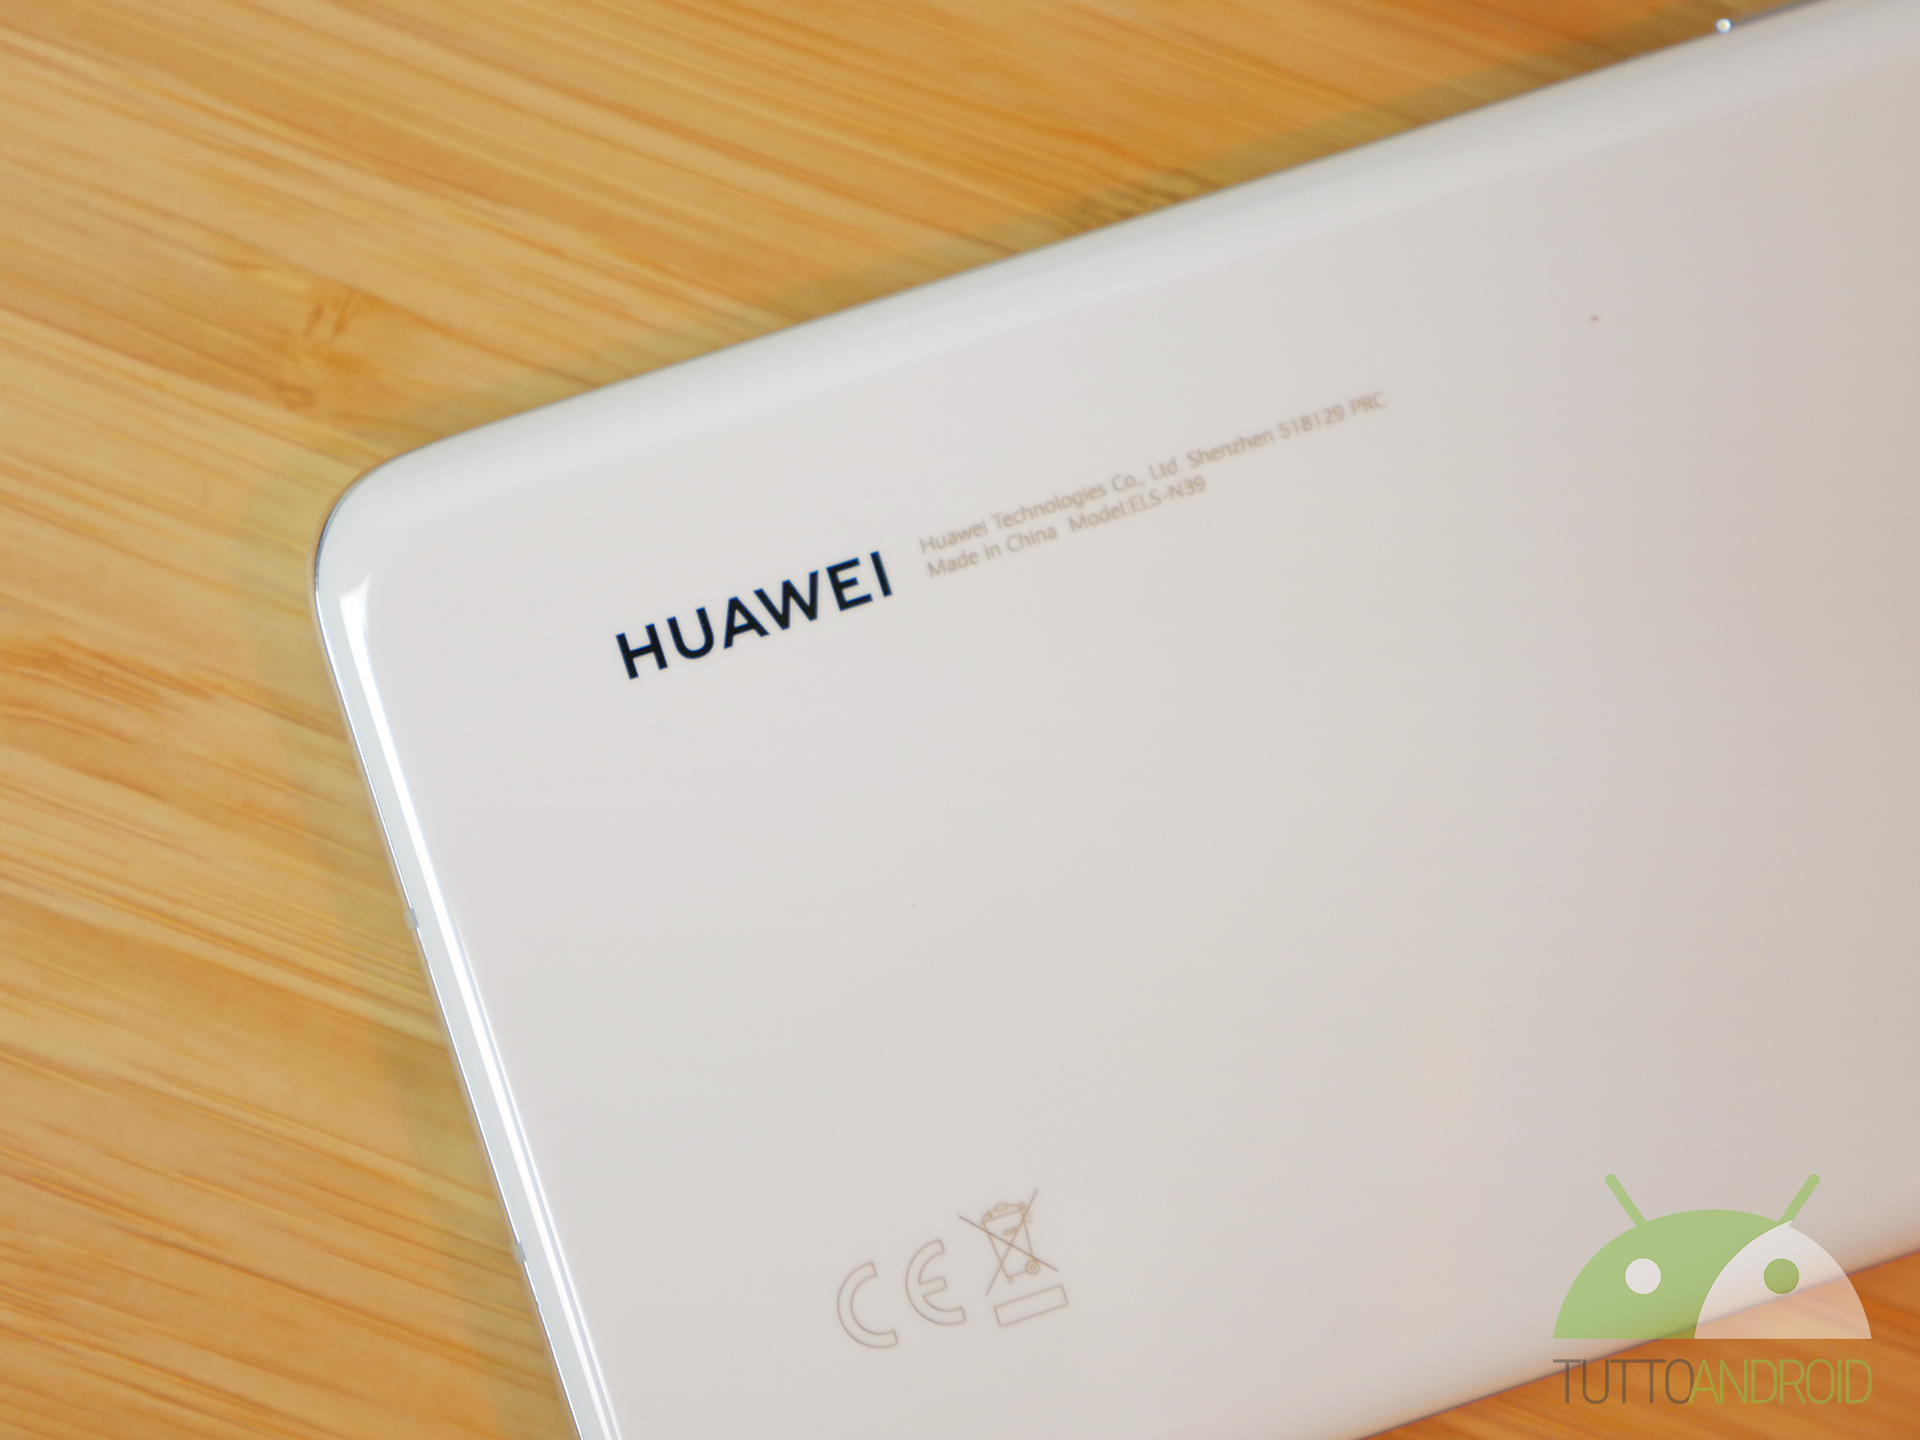 L’UE considera l’esclusione obbligatoria di Huawei per le reti 5G